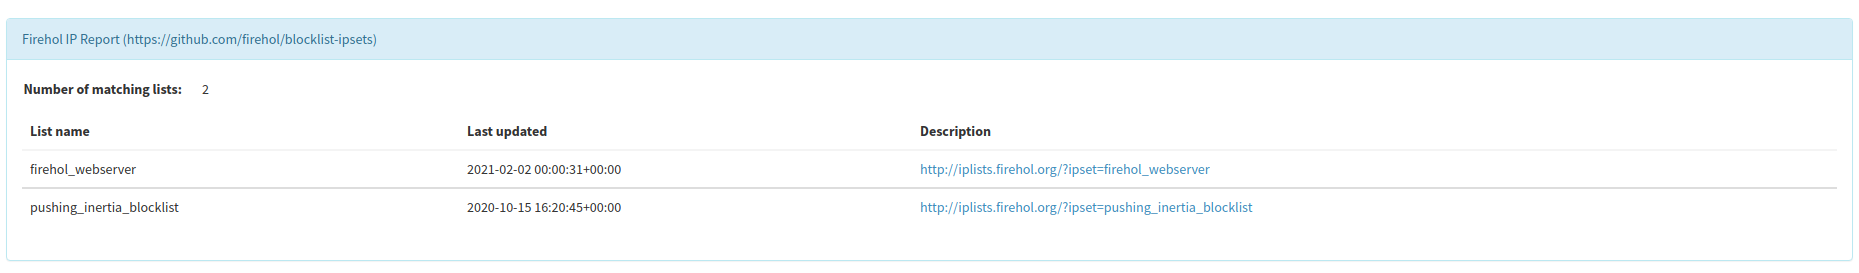 FireHOL Blocklists: long report